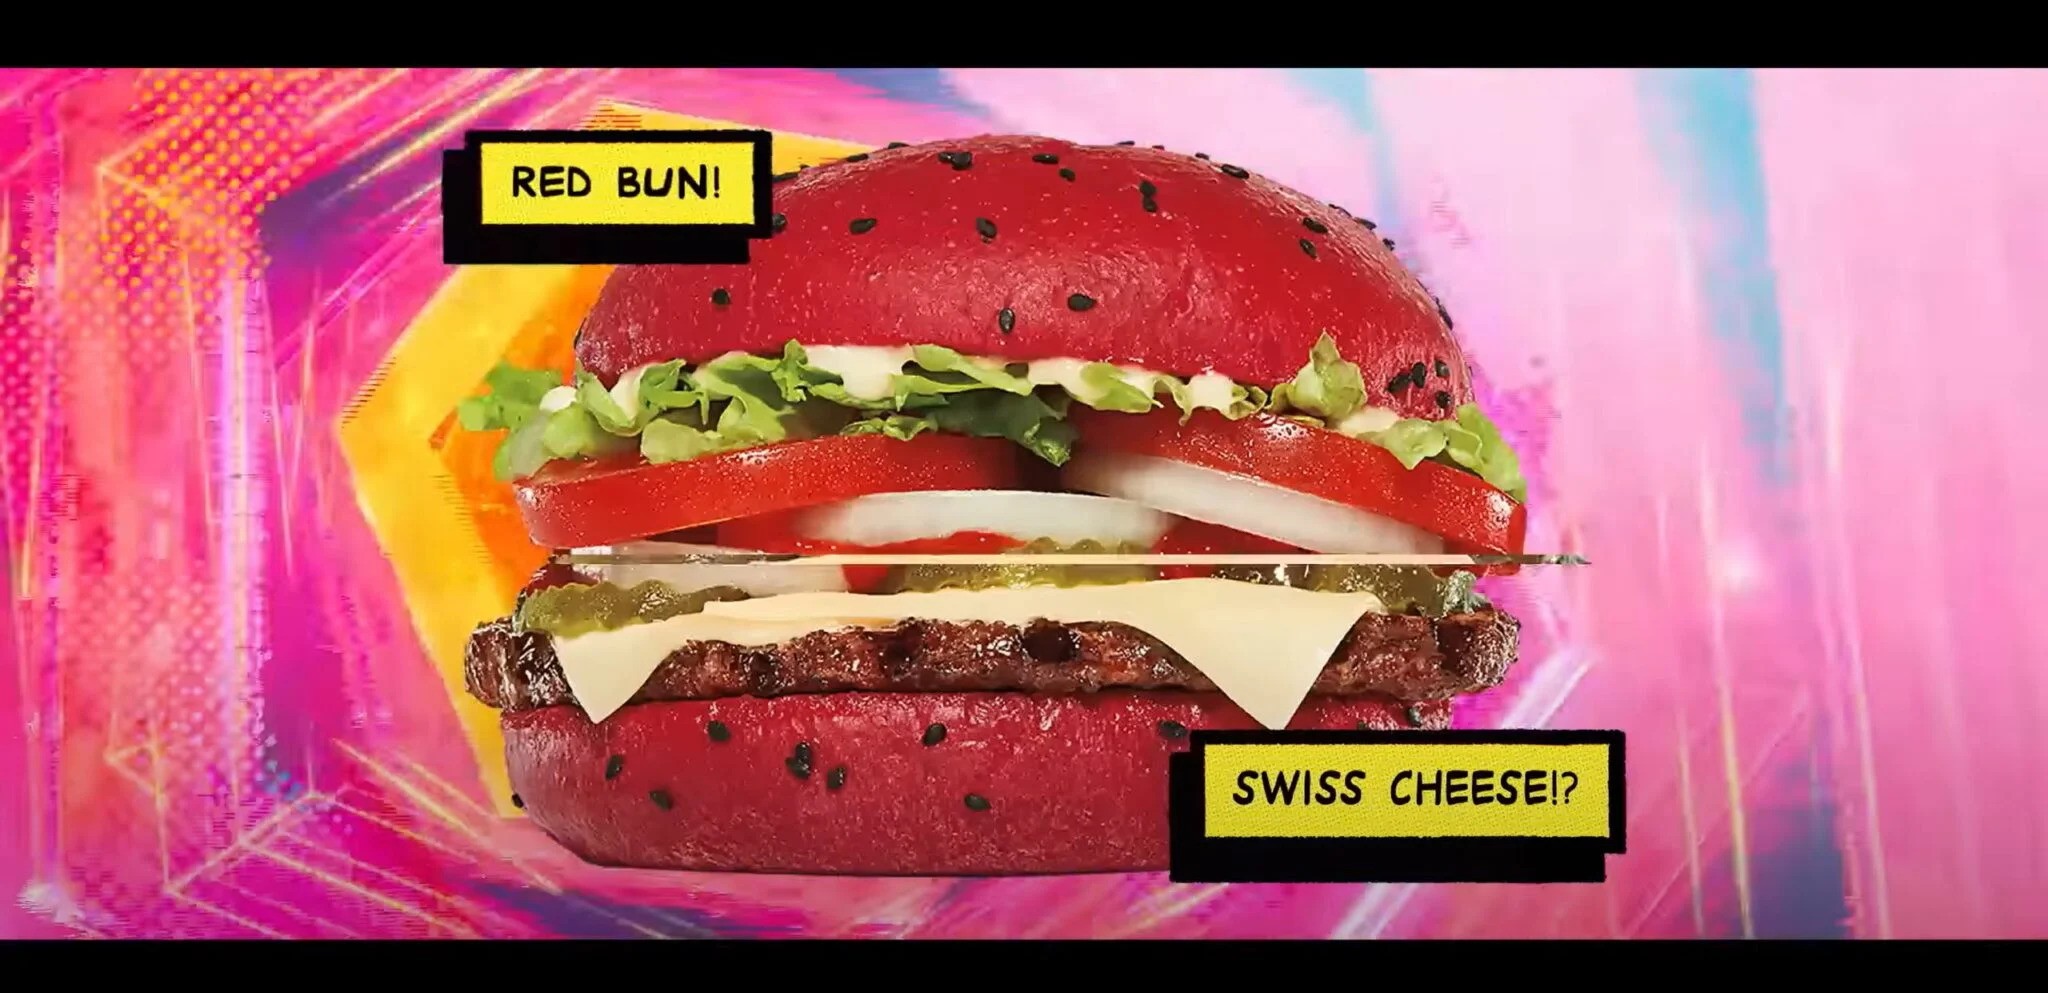 Spiderman Ice Cream Burger King : The Ultimate Spider-Verse Sundae Experience